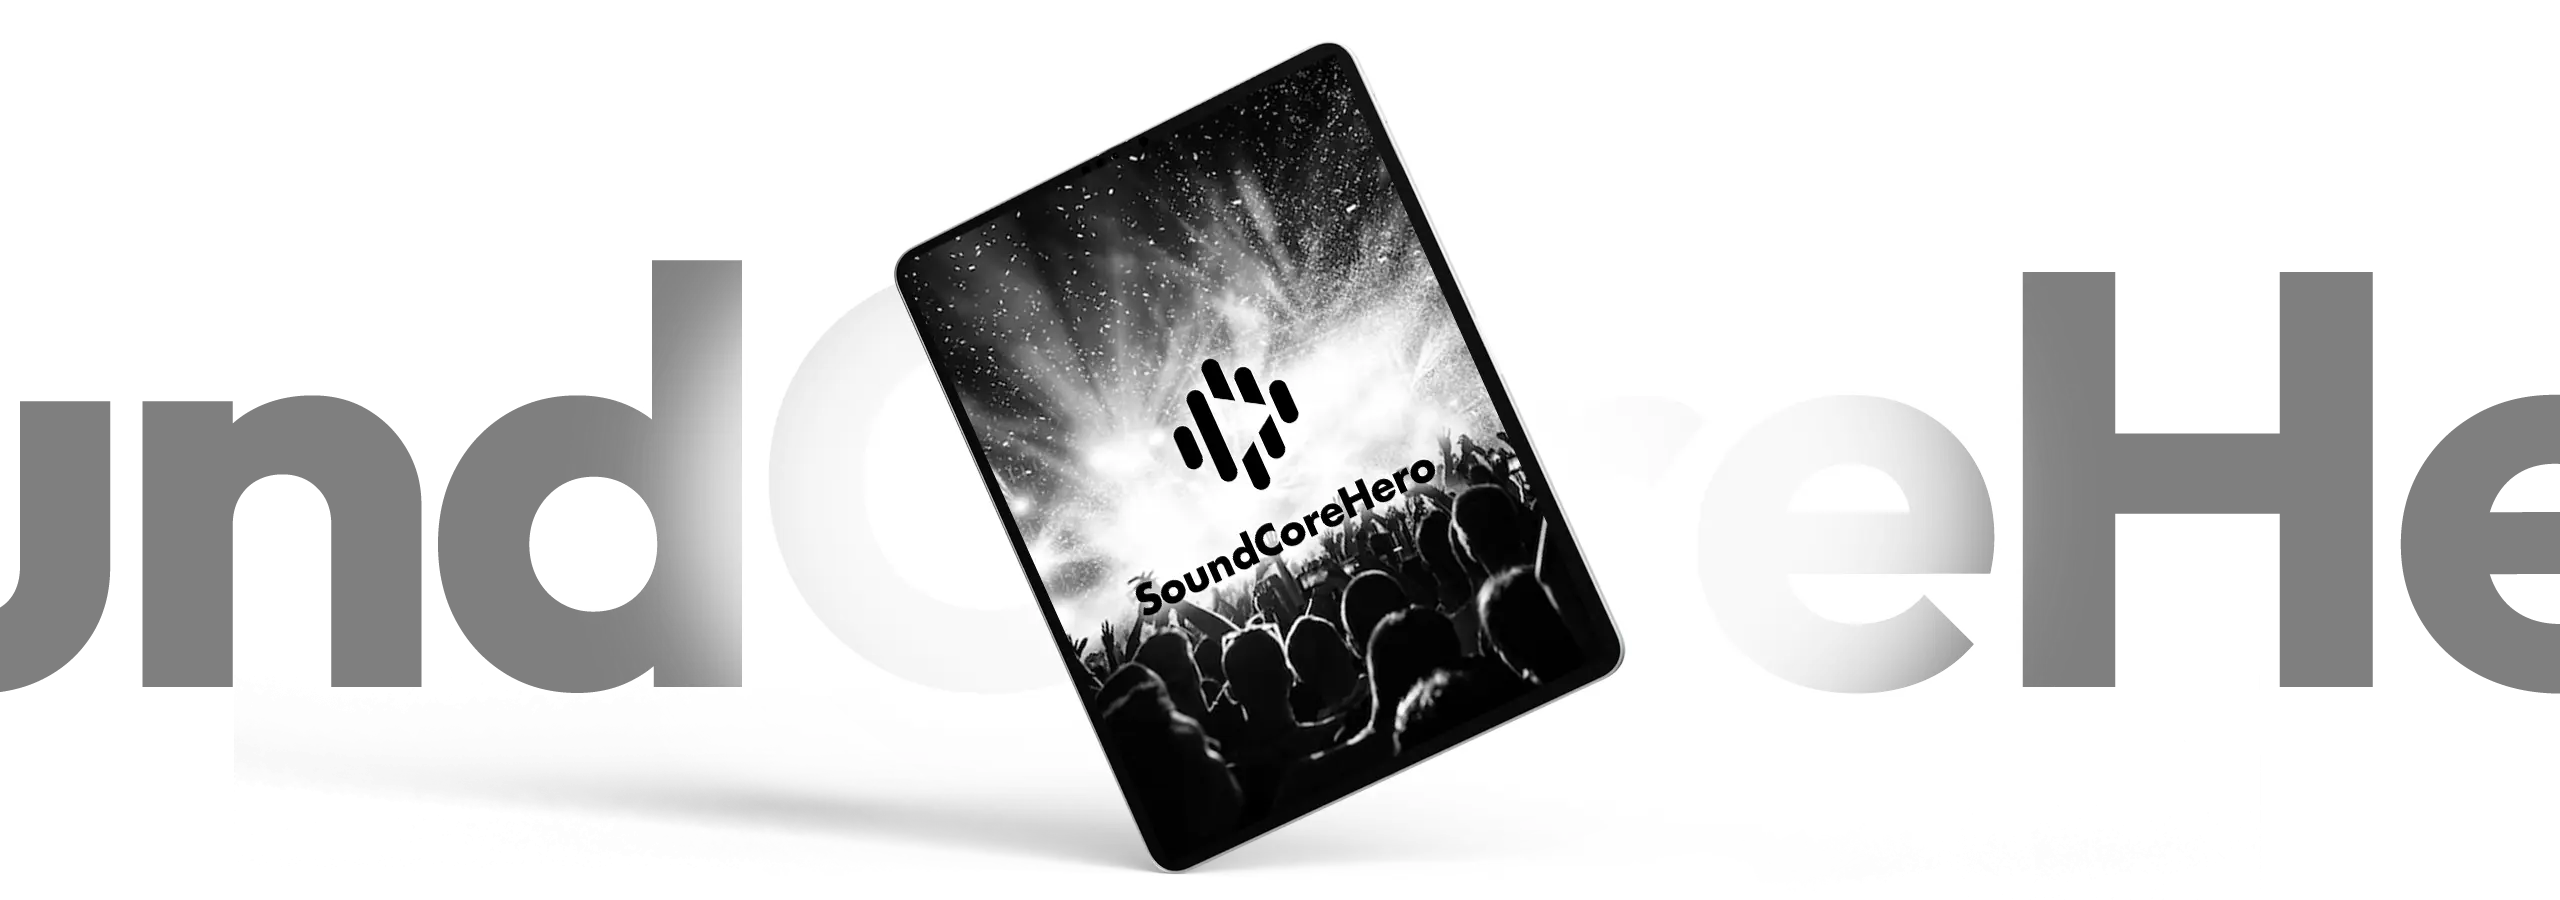 SoundCoreHero - Wielostrefowy multiplayer audio, serwer audio